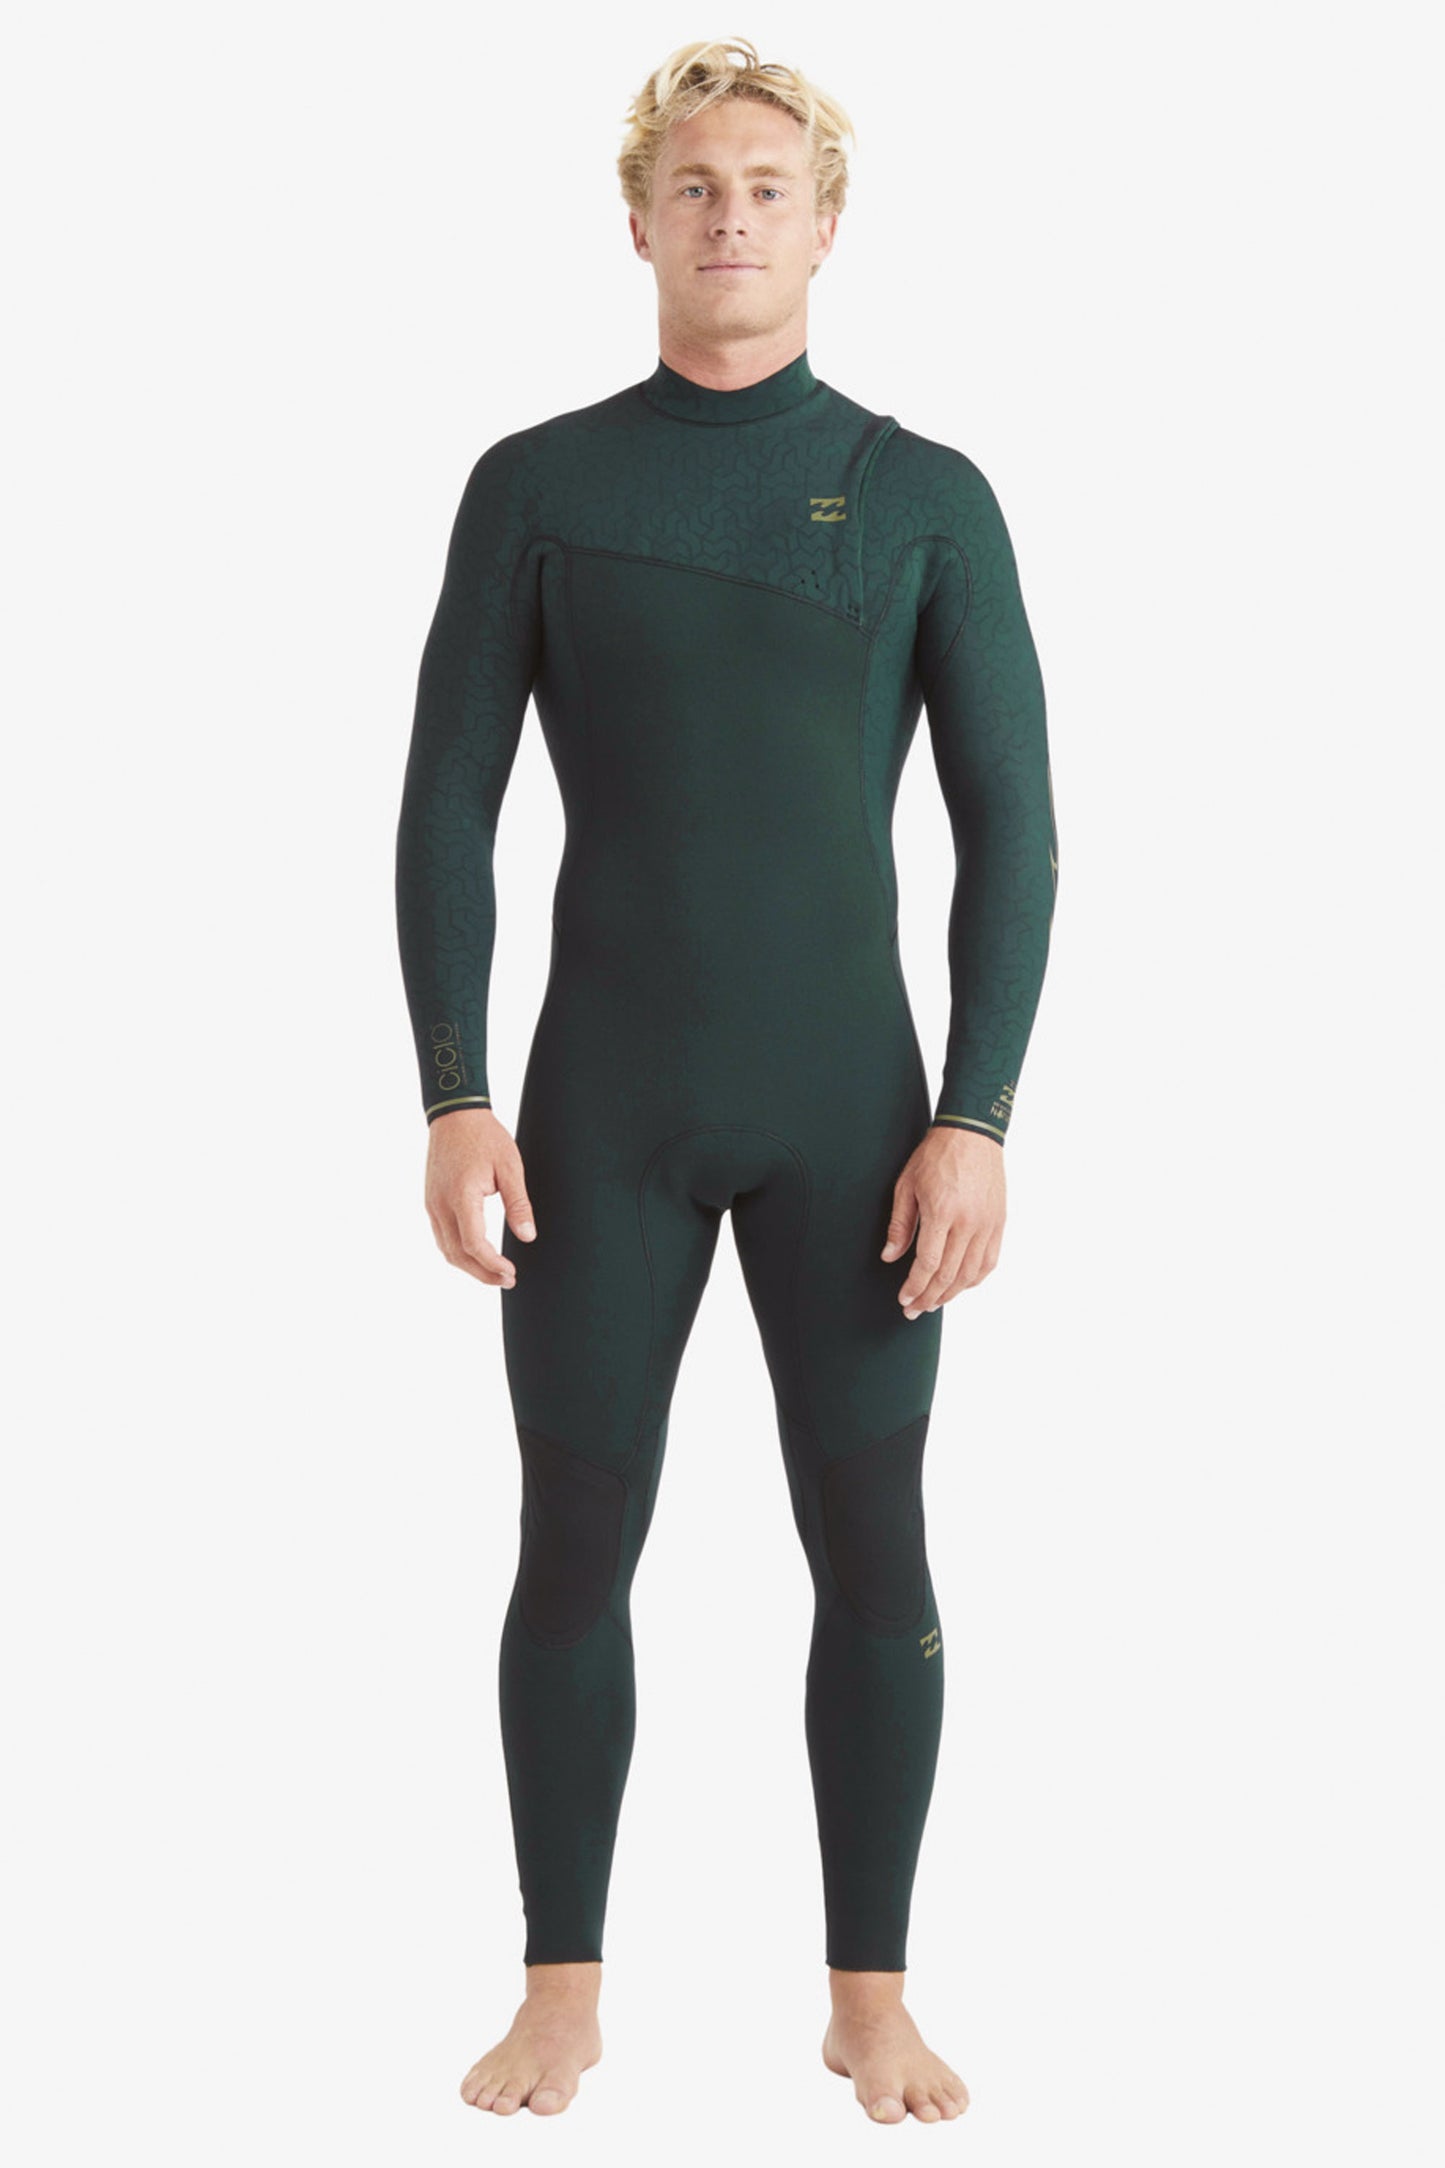 Pukas-Surf-Shop-wetsuit-billabong-4-3-revolution-natural-dark-forest